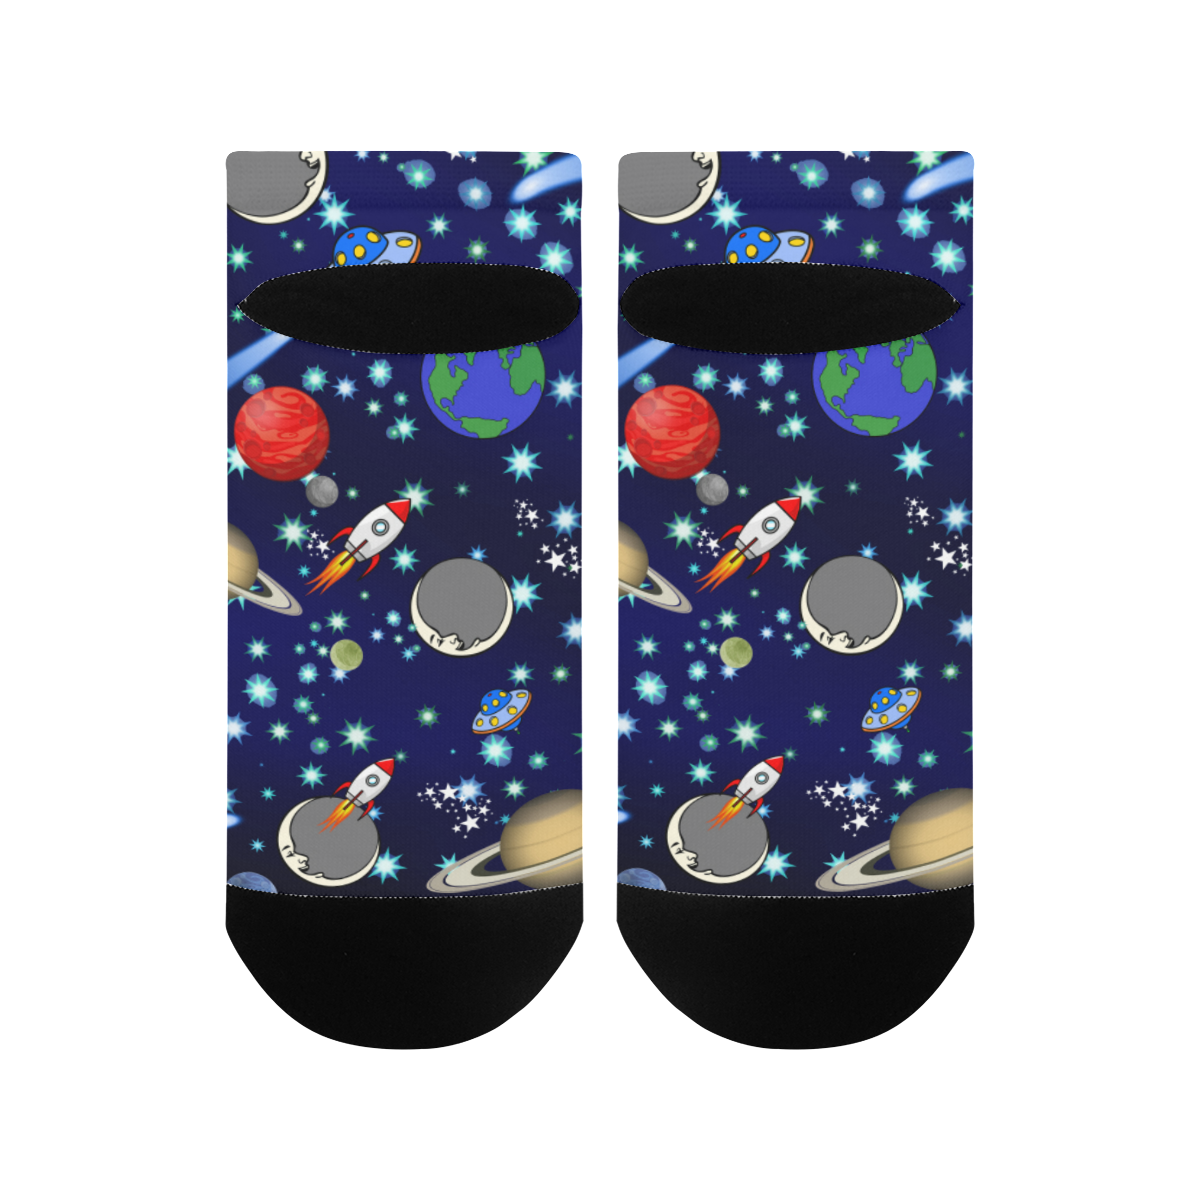 Galaxy Universe - Planets,Stars,Comets,Rockets Men's Ankle Socks